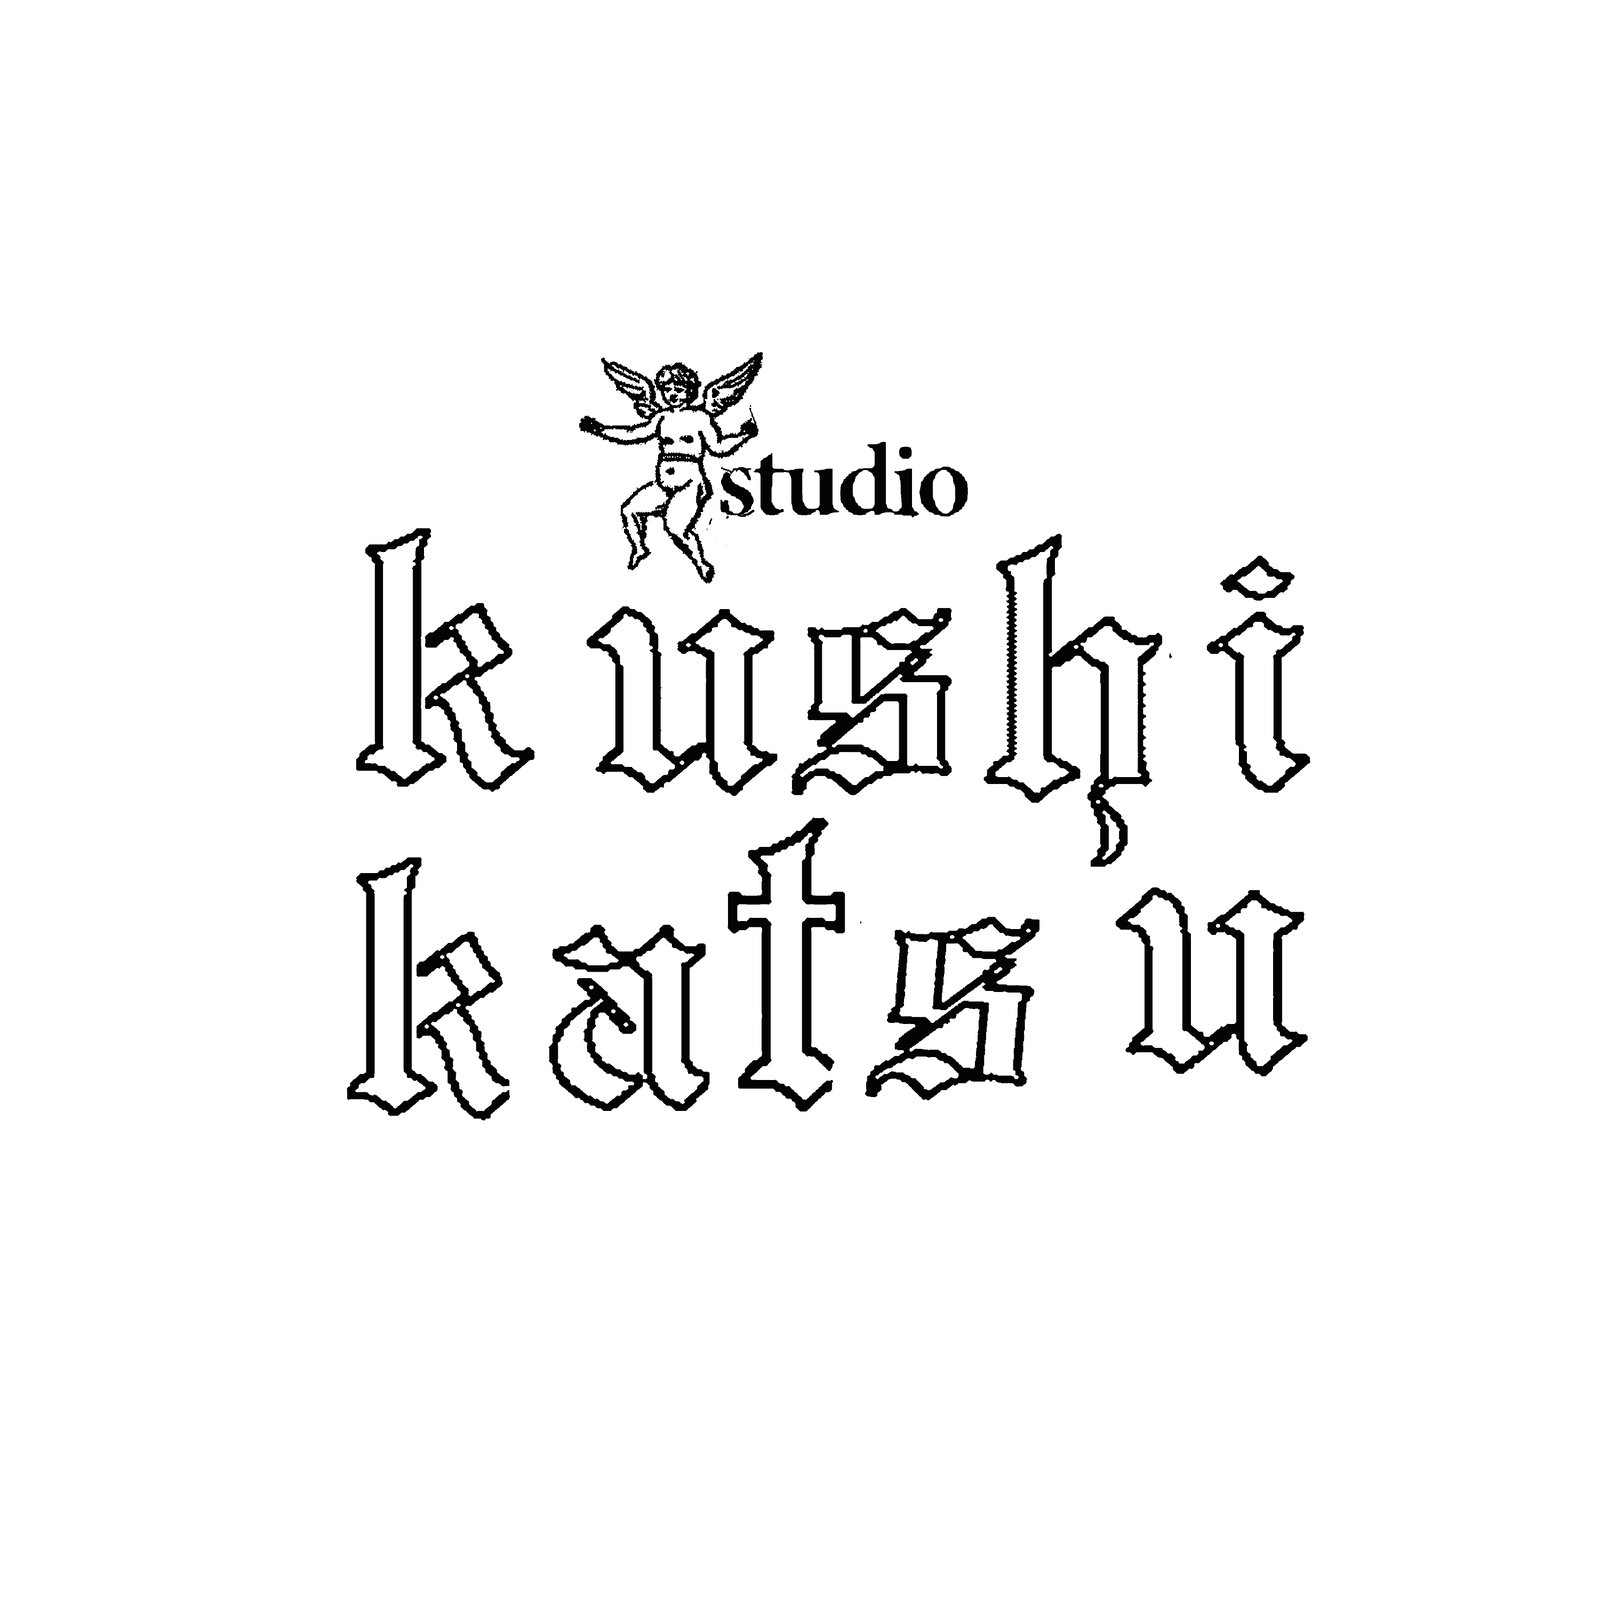 Details more than 73 karthik tattoo studio